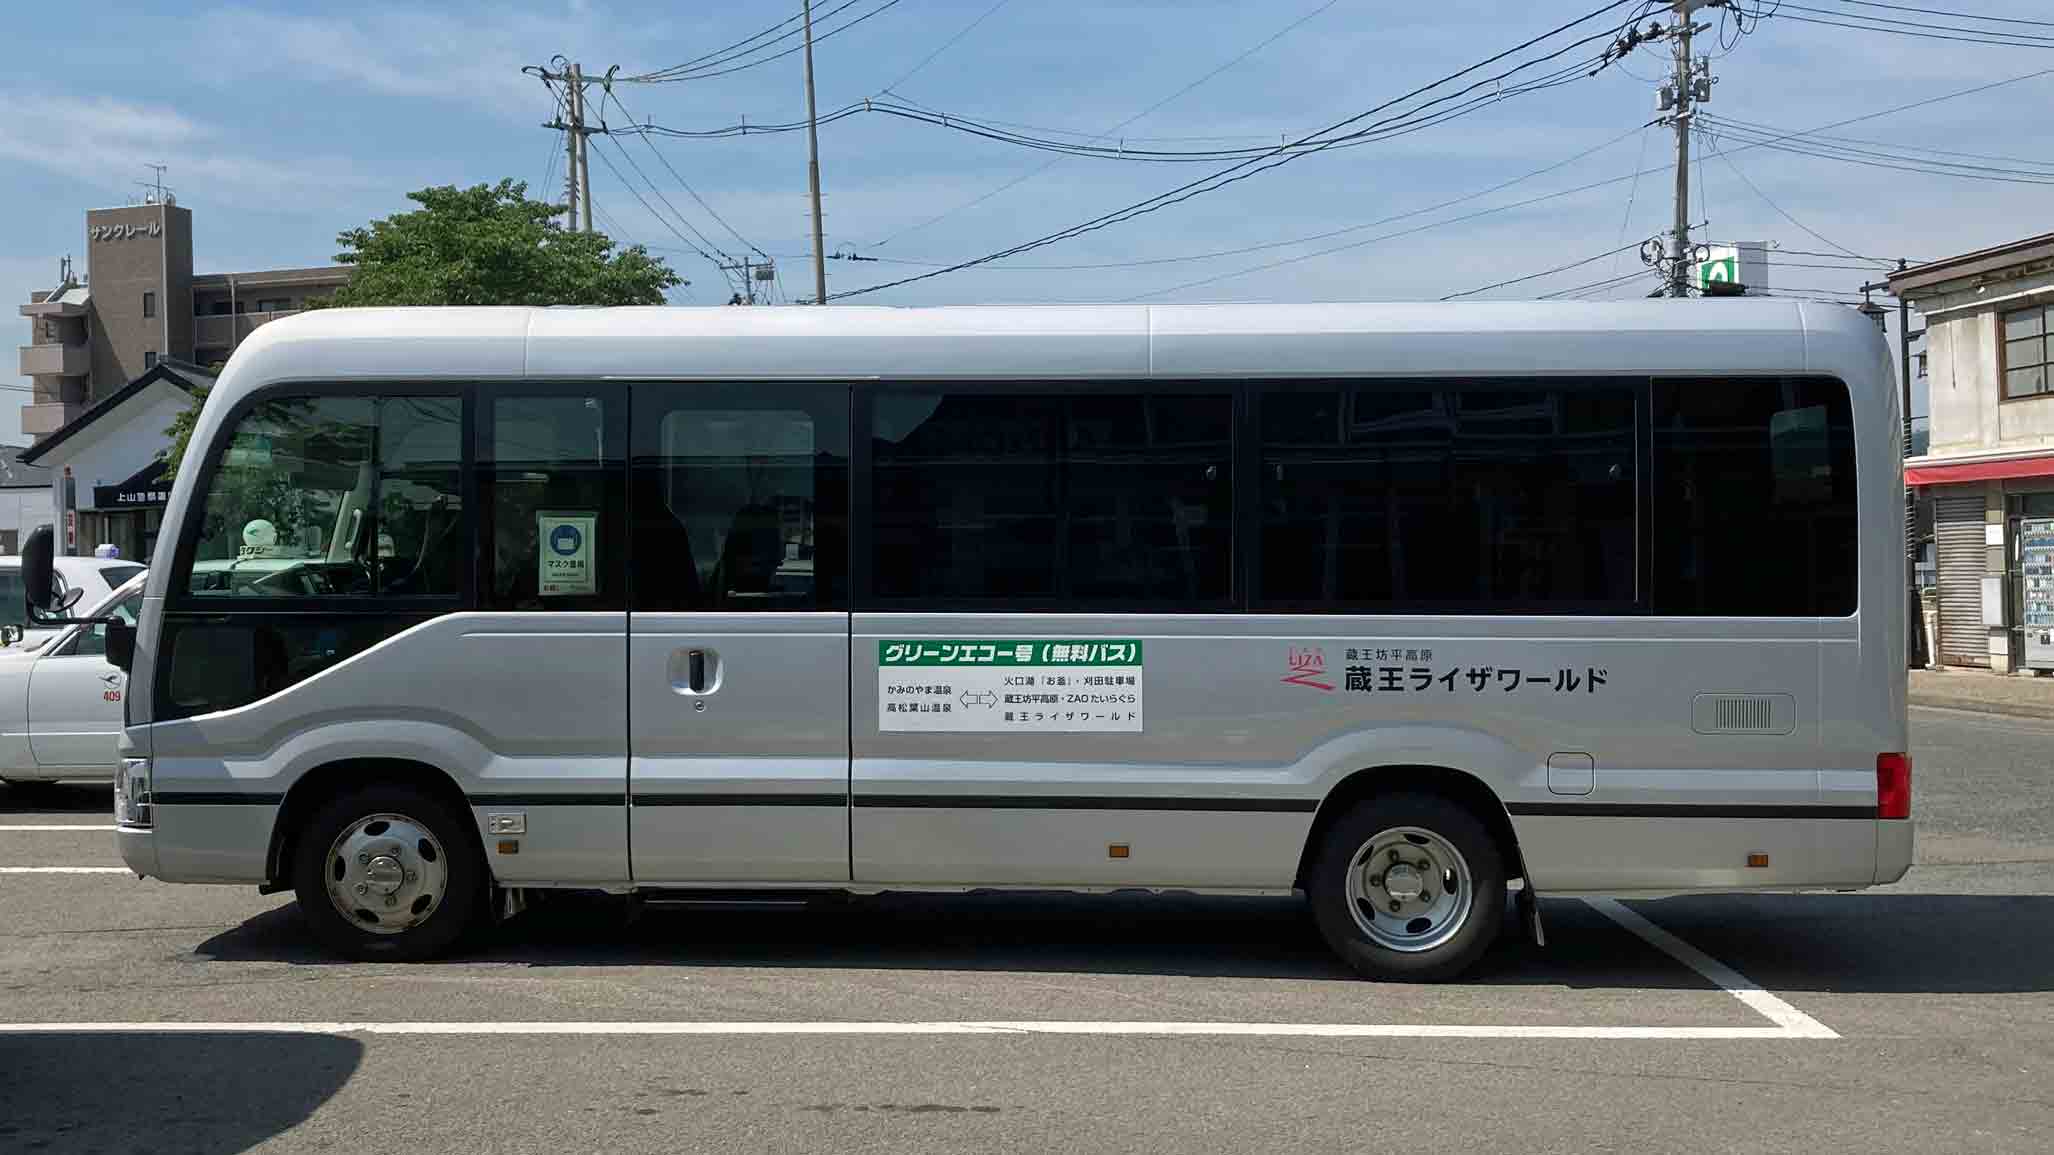 Free shuttle bus 'Green Echo' or 'White Echo'